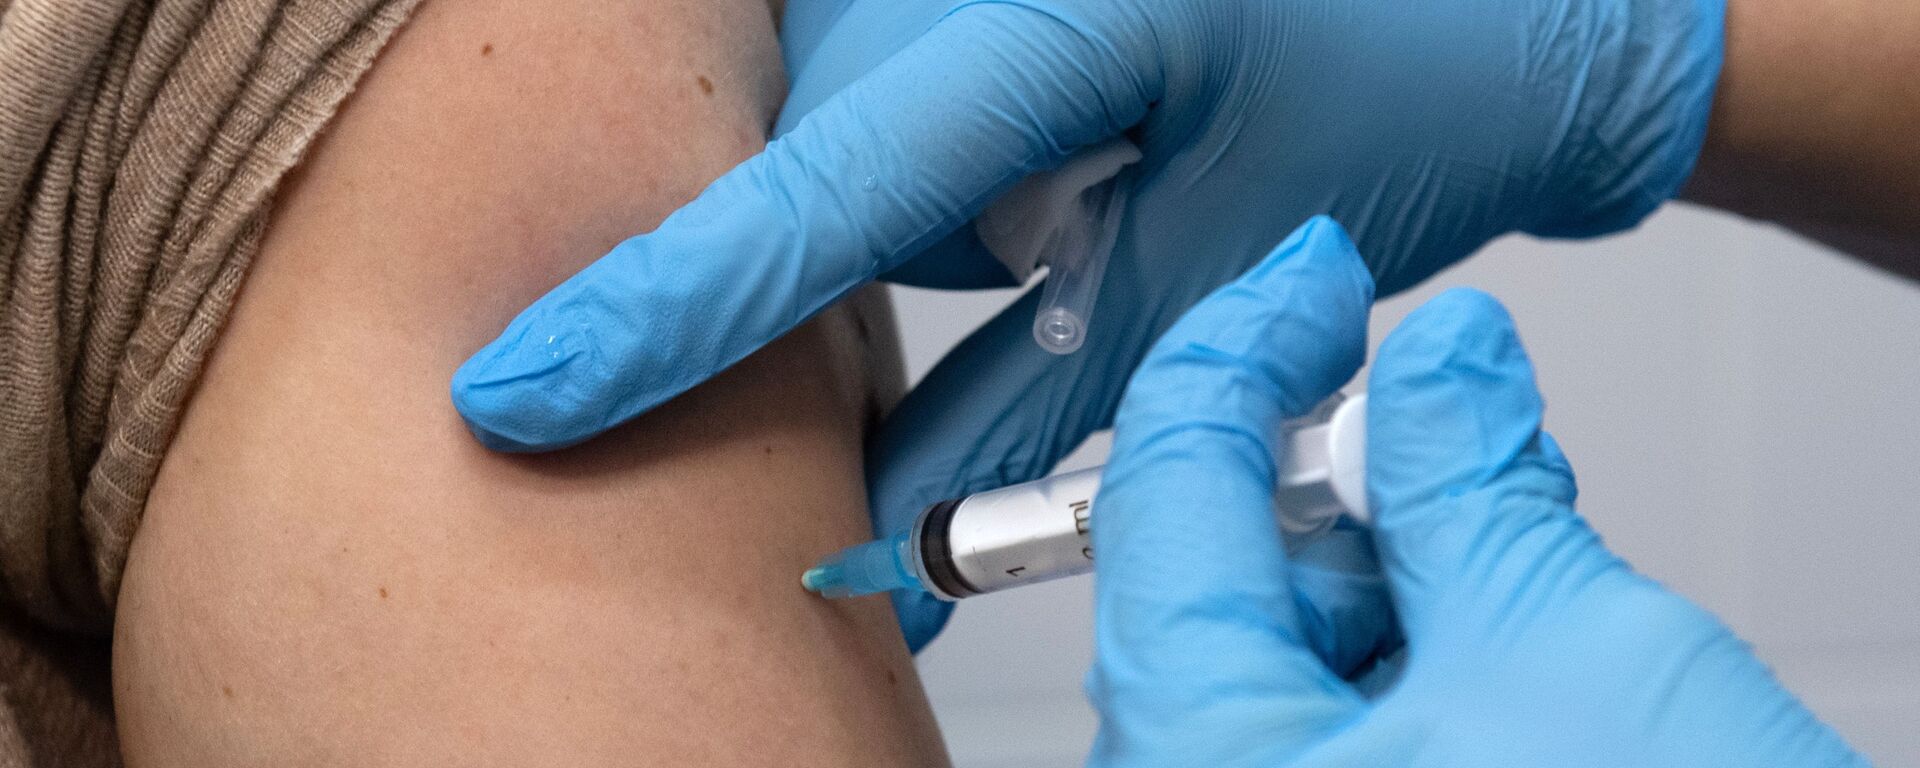 تطعيم أهالي موسكو بلقاح ضد فيروس كورونا (كوفيد - 19)، روسيا 5 ديسمبر 2020 - سبوتنيك عربي, 1920, 24.09.2022